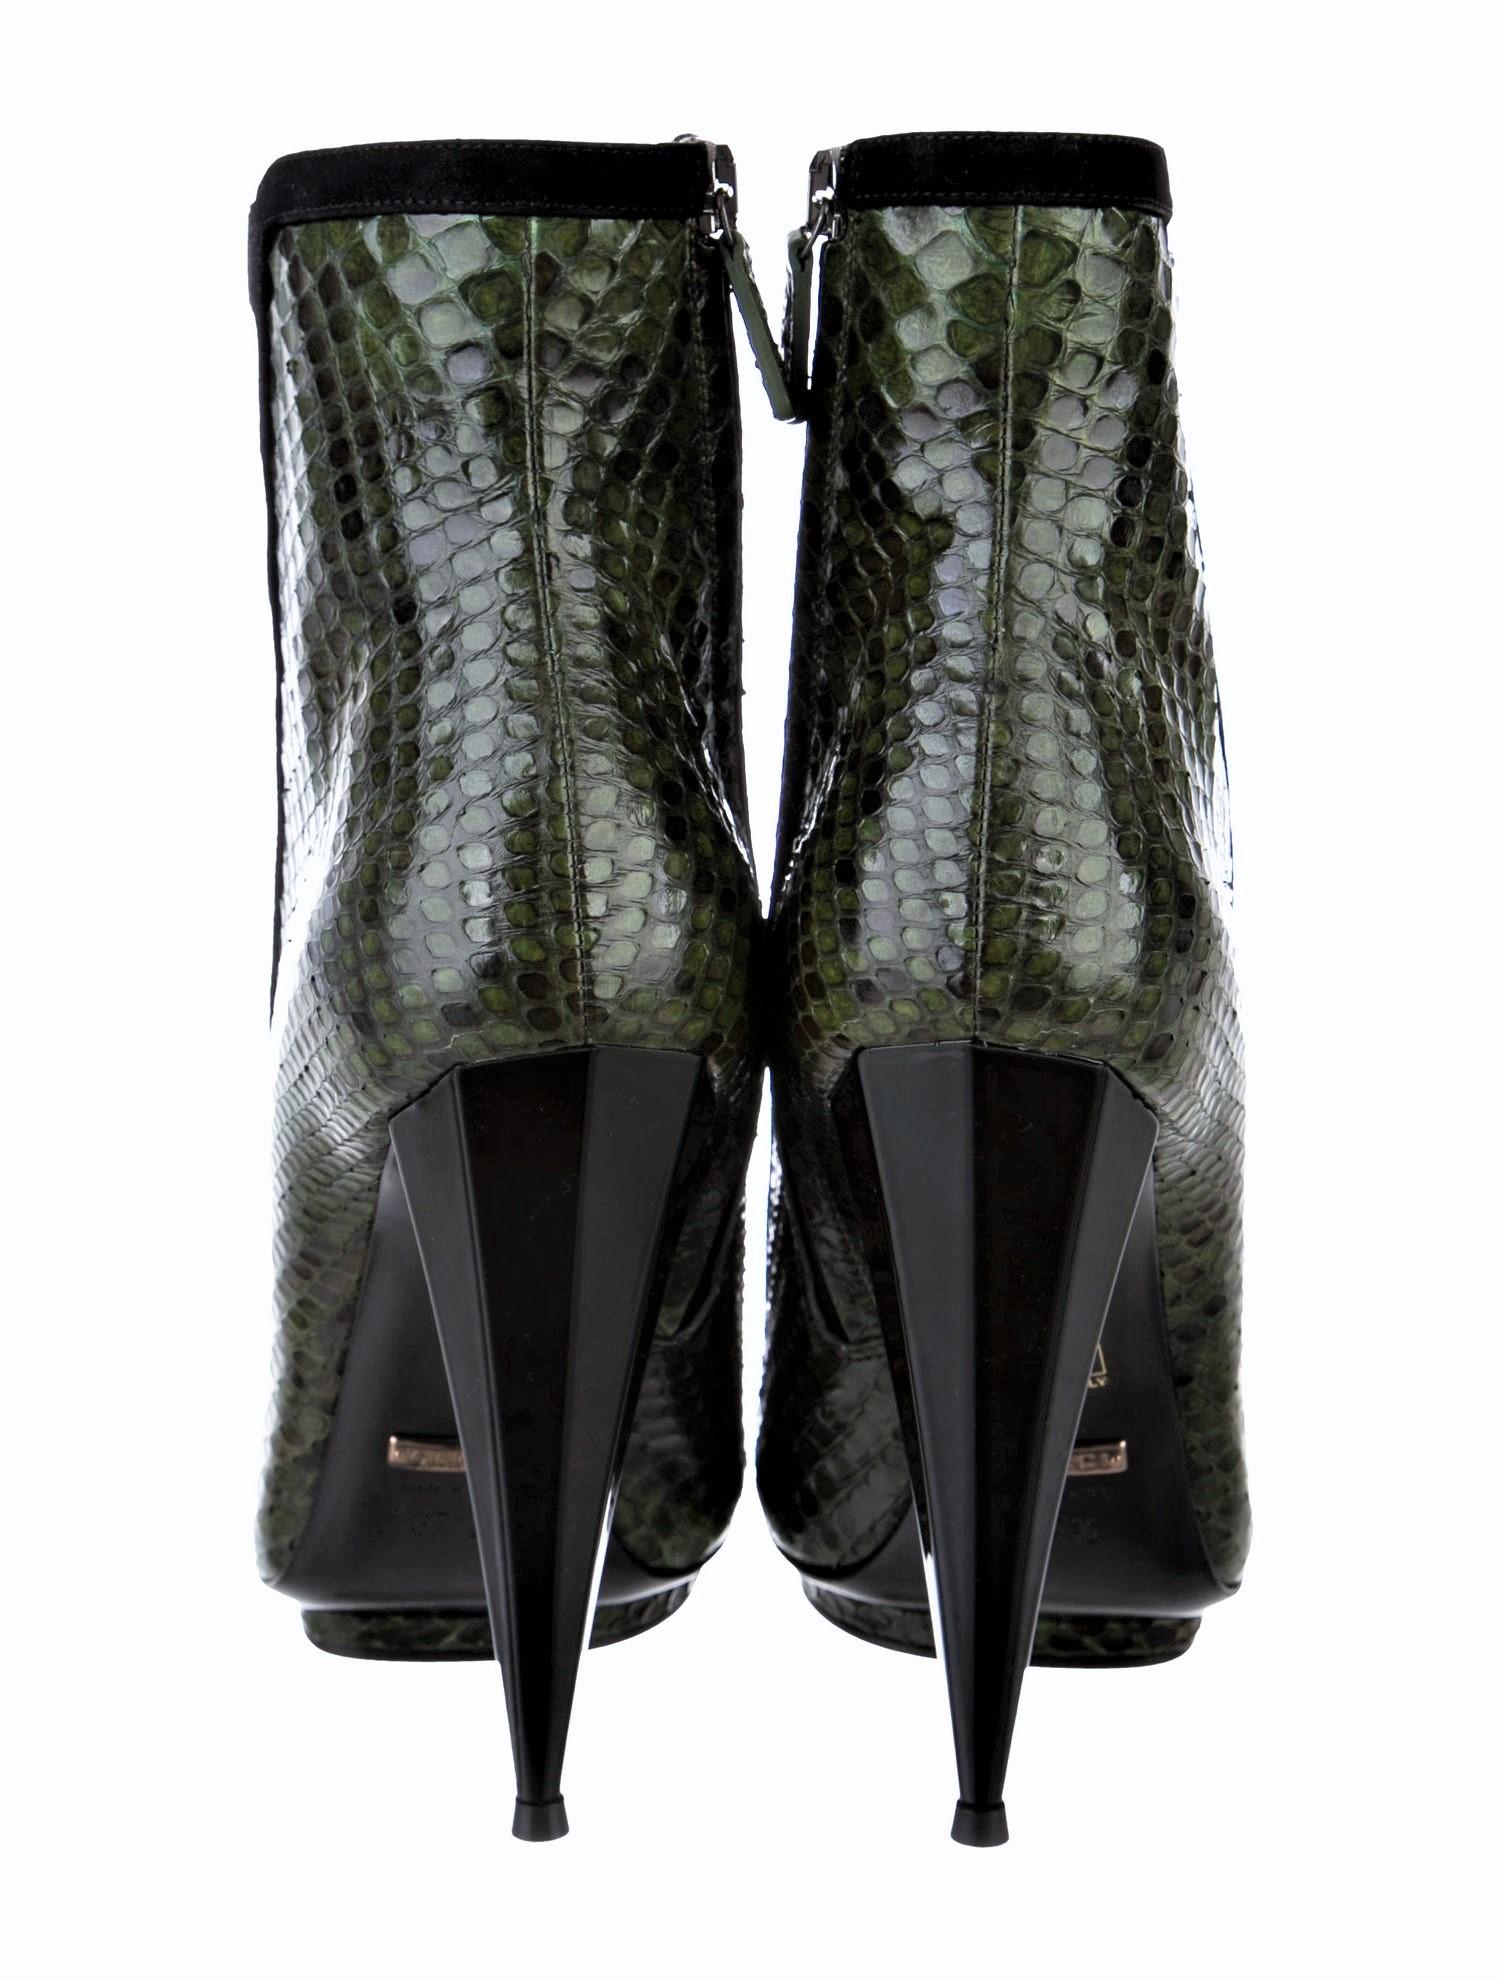 New Gucci Python Snakeskin S/S 2014 Runway Nicki Minaj Heels Booties Boots Sz 38 4